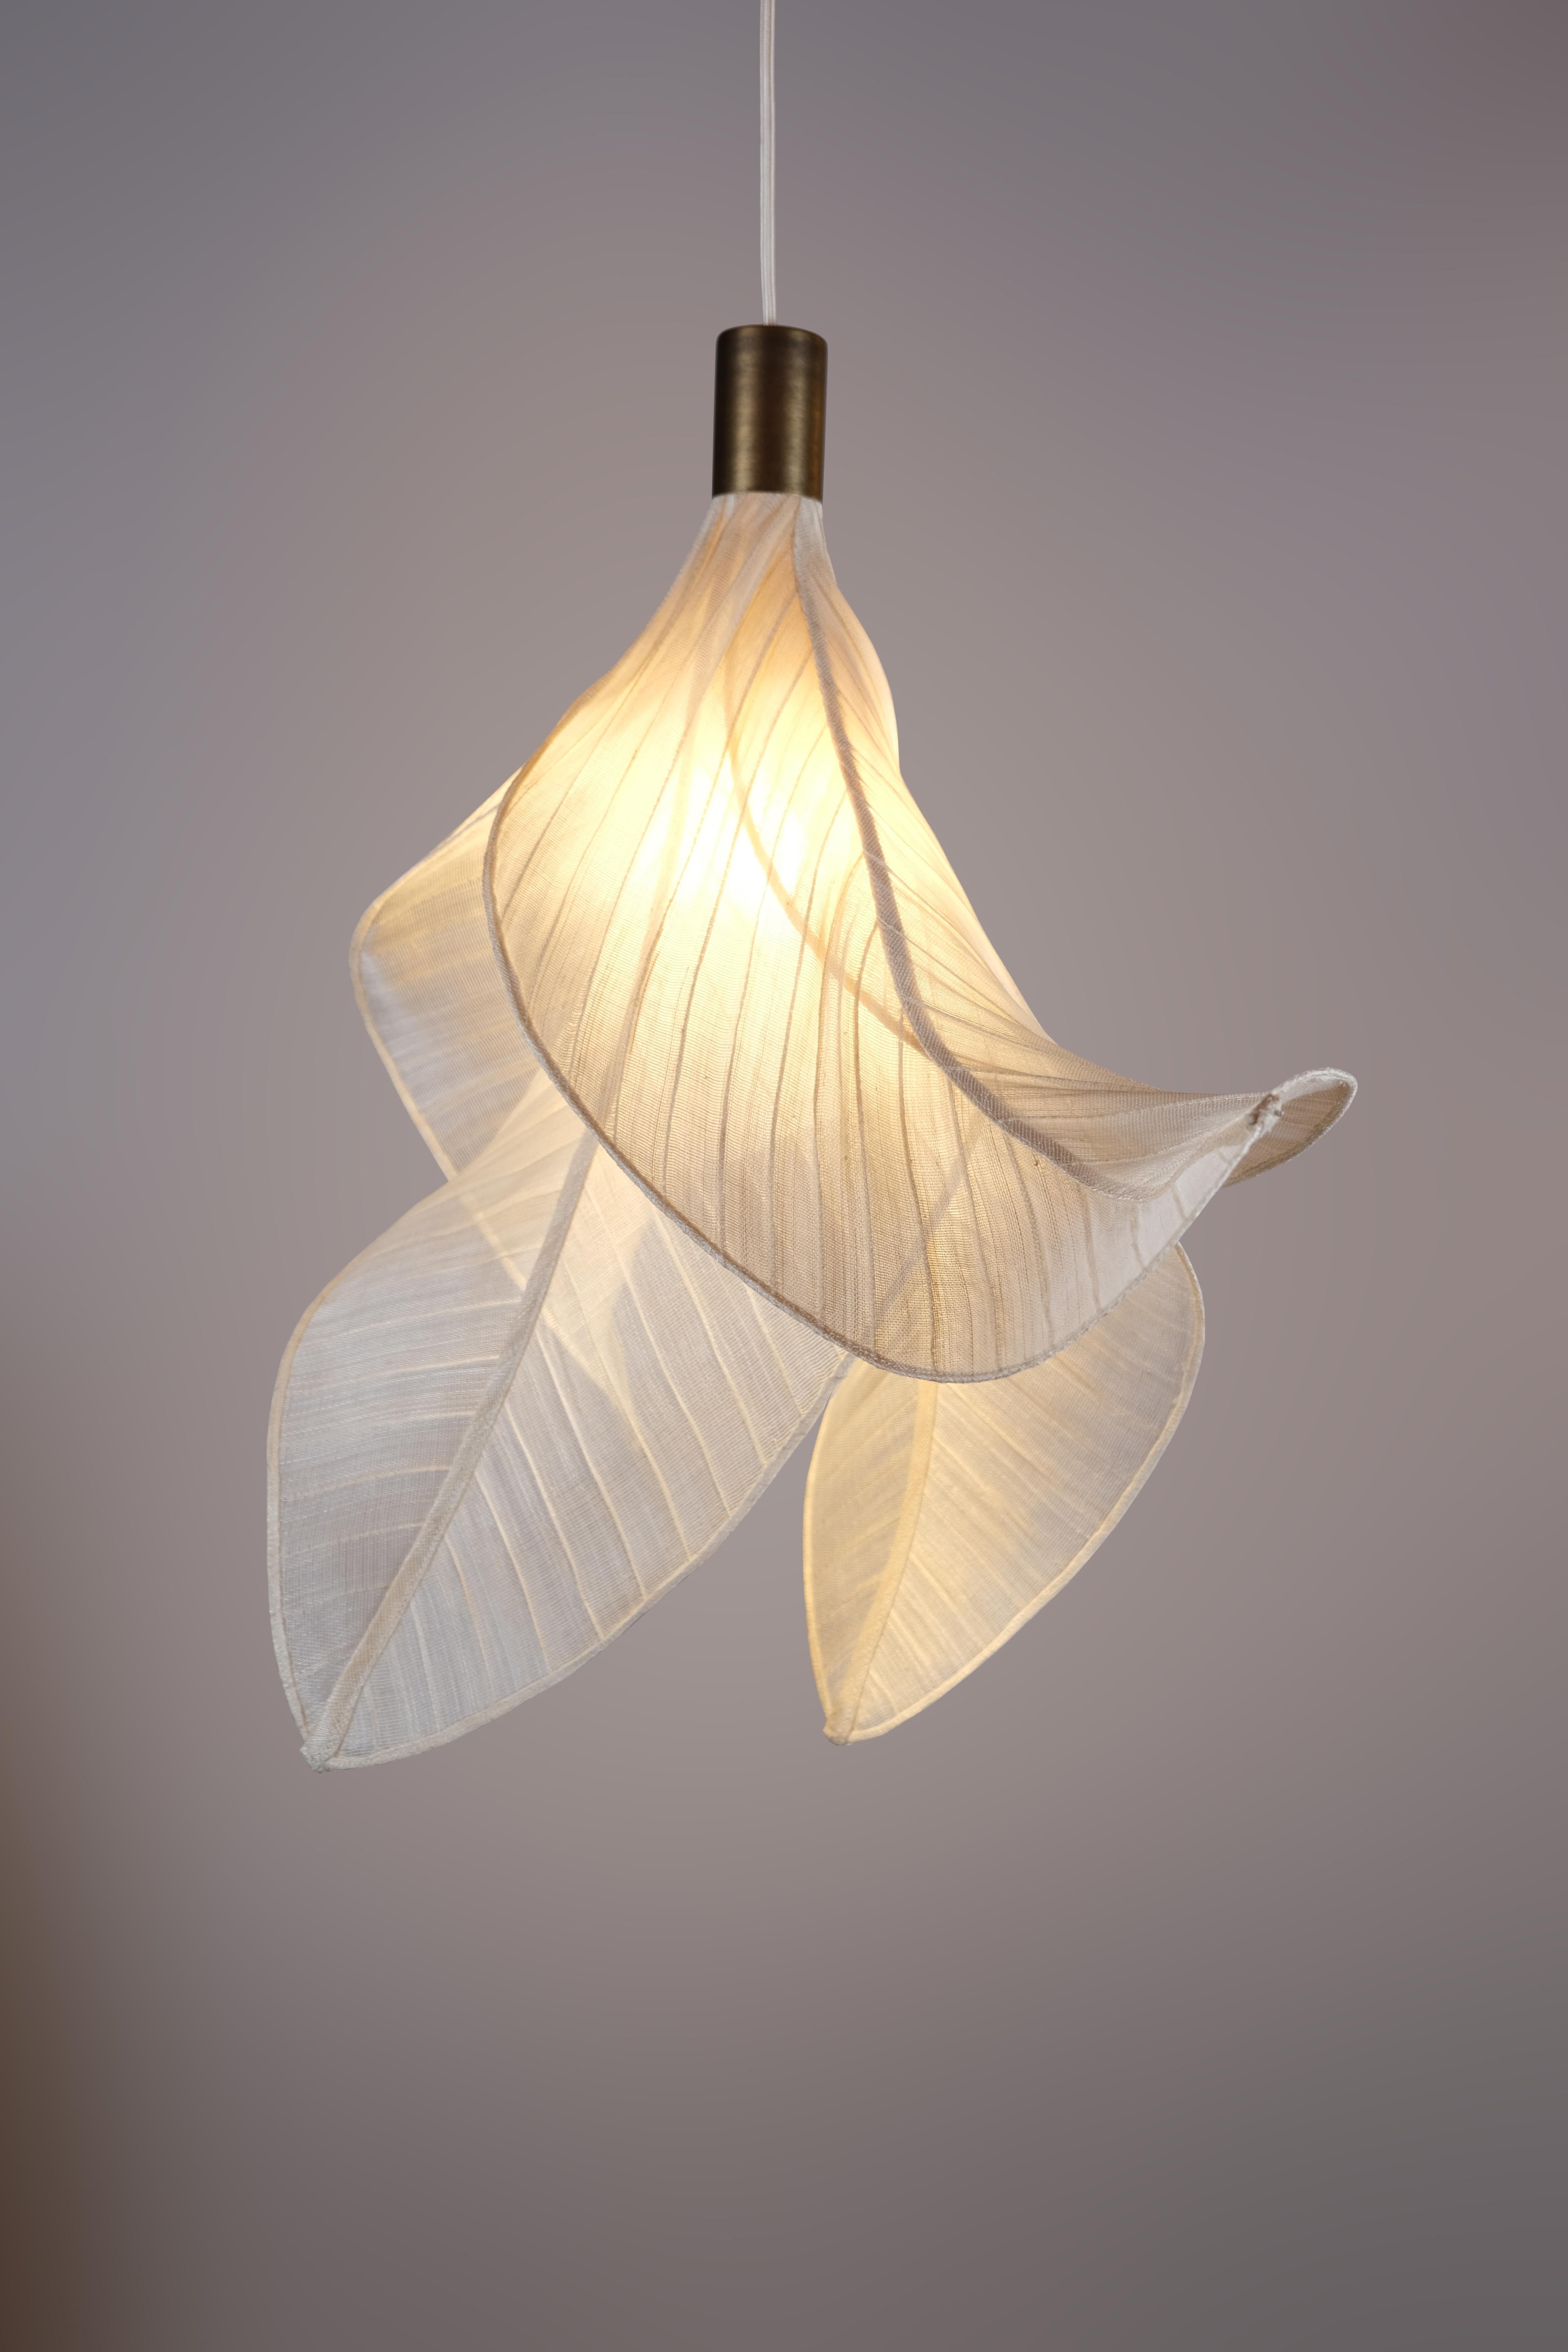 Italian Modern Fabric Collectible Sculptural Pendant Light from Studio Mirei, Sirenetta For Sale